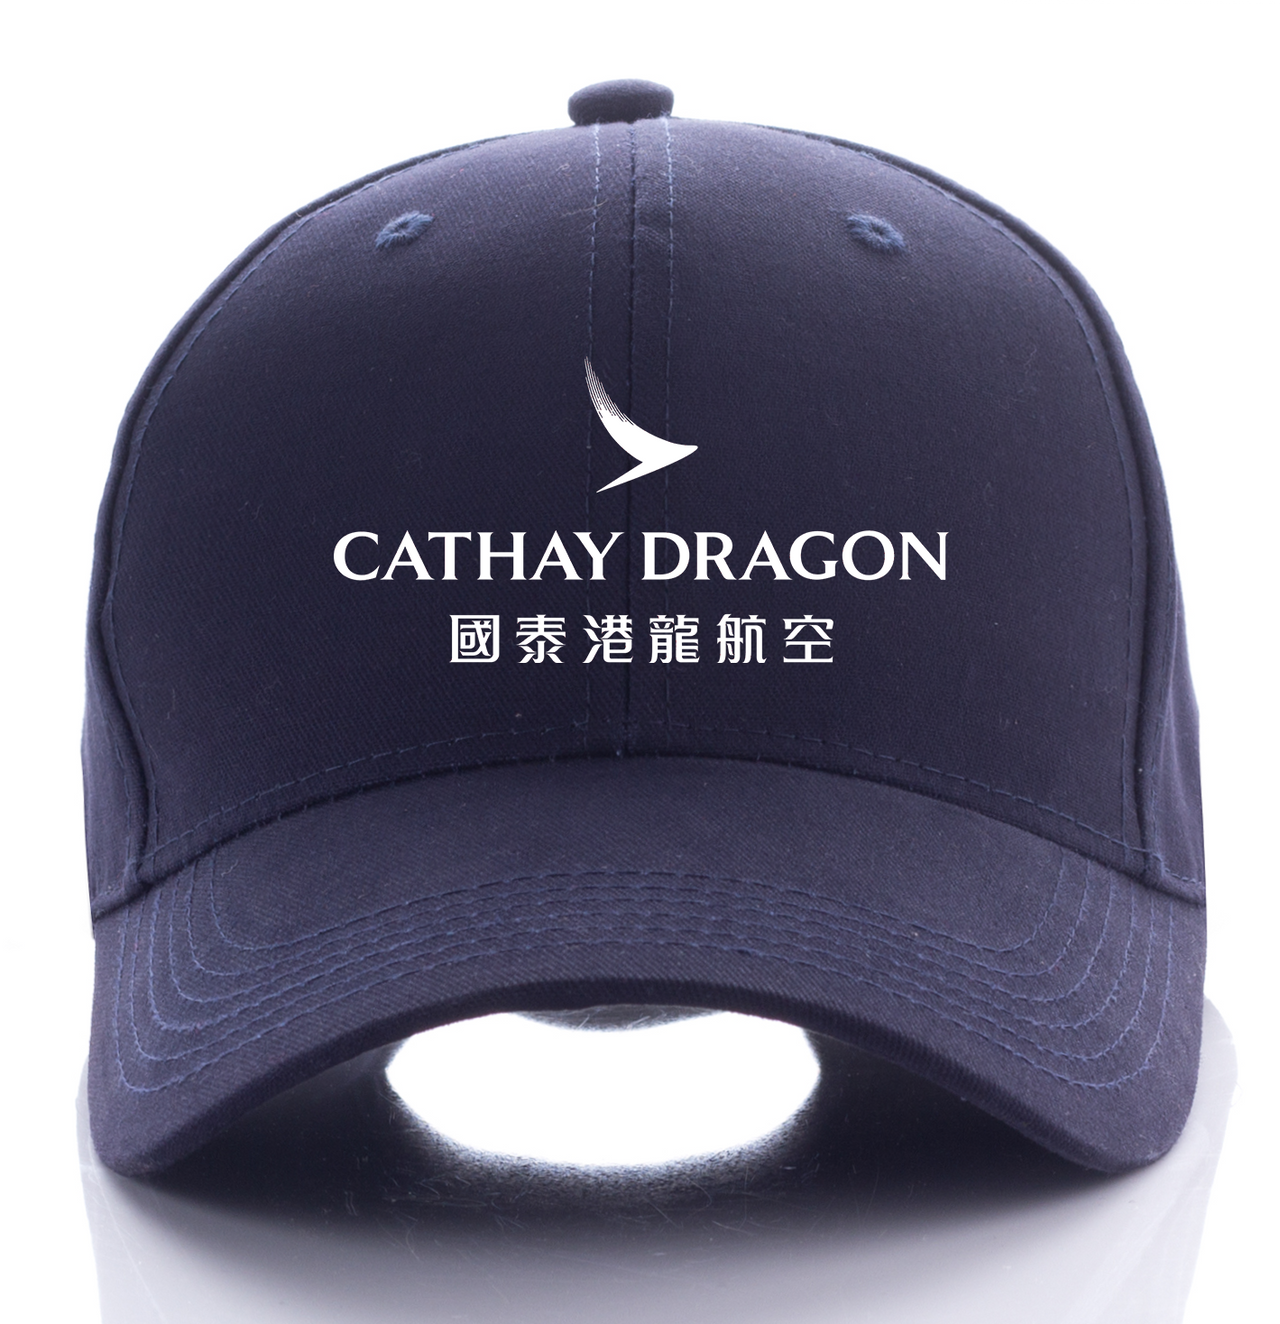 CATHAY DRAGON AIRLINE DESIGNED CAP